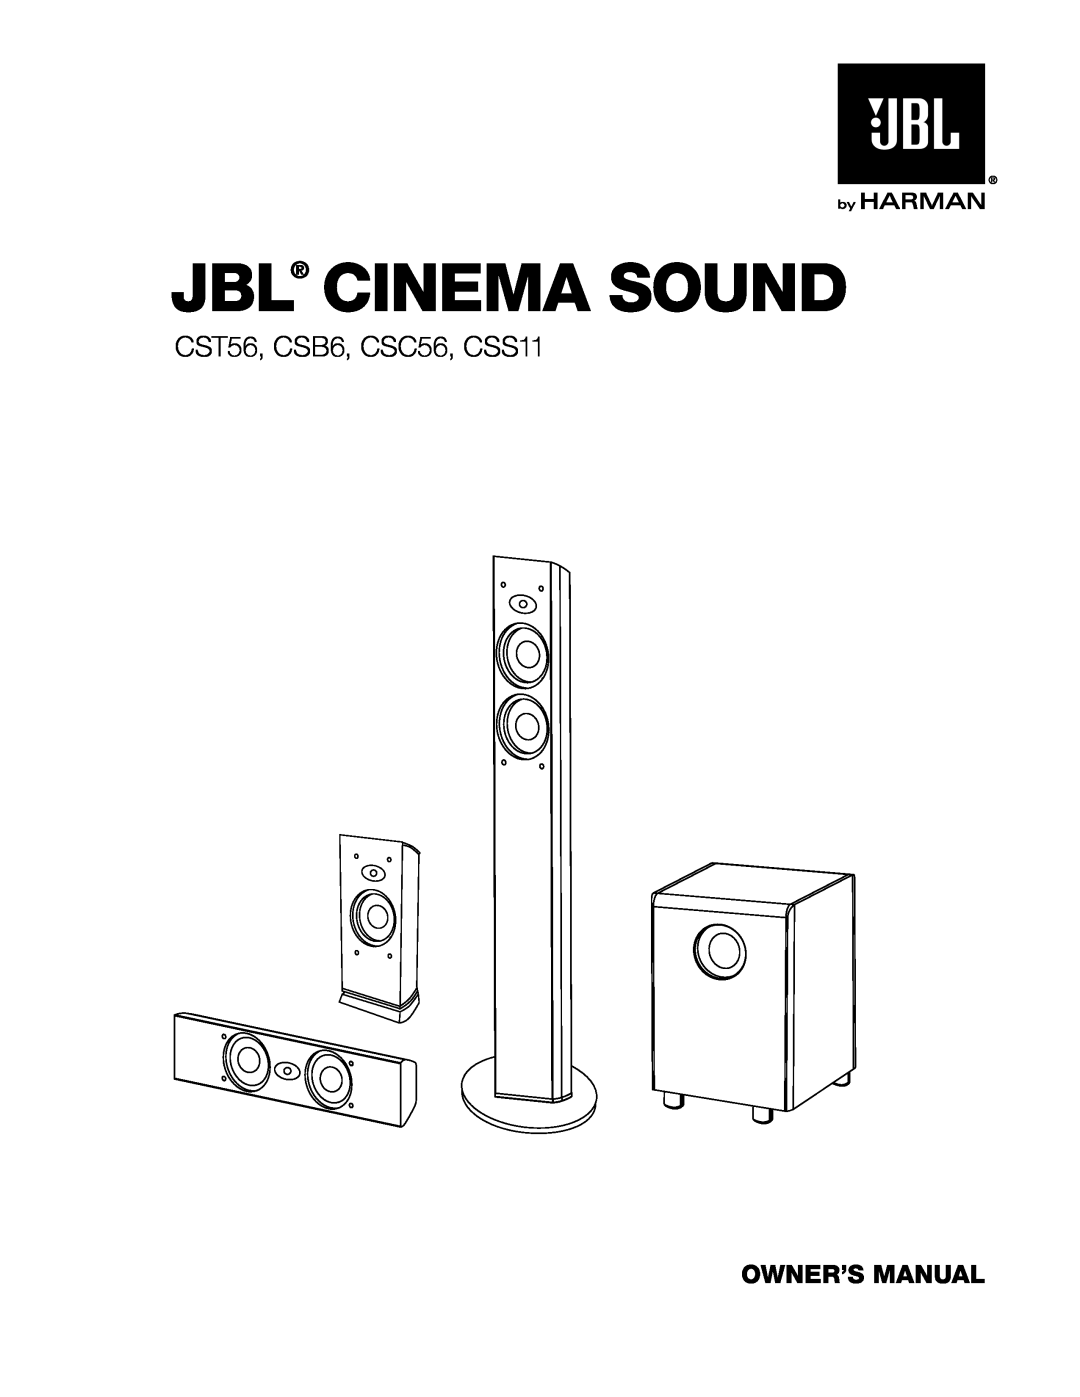 JBL owner manual Jbl Cinema Sound, CST56, CSB6, CSC56, CSS11 